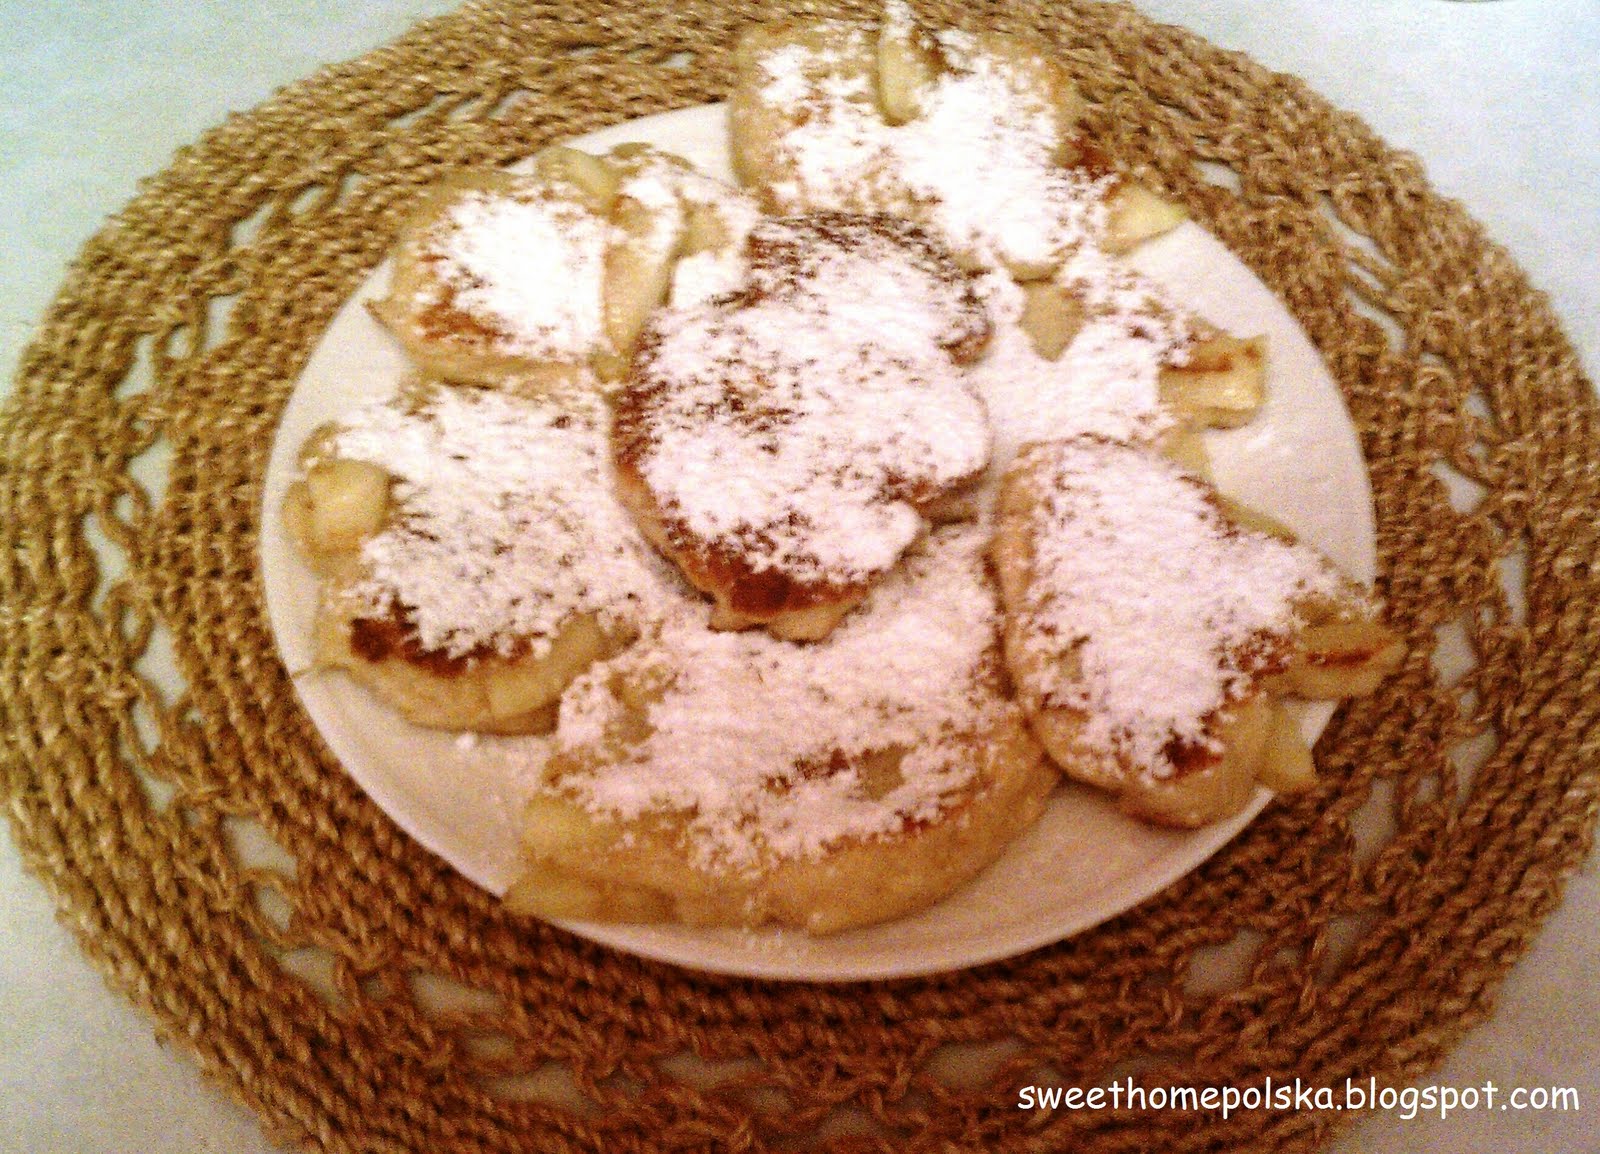 Home Polska:  flour Polish apples pancakes / Racuchy without racuszki with Sweet  can make you how pancakes